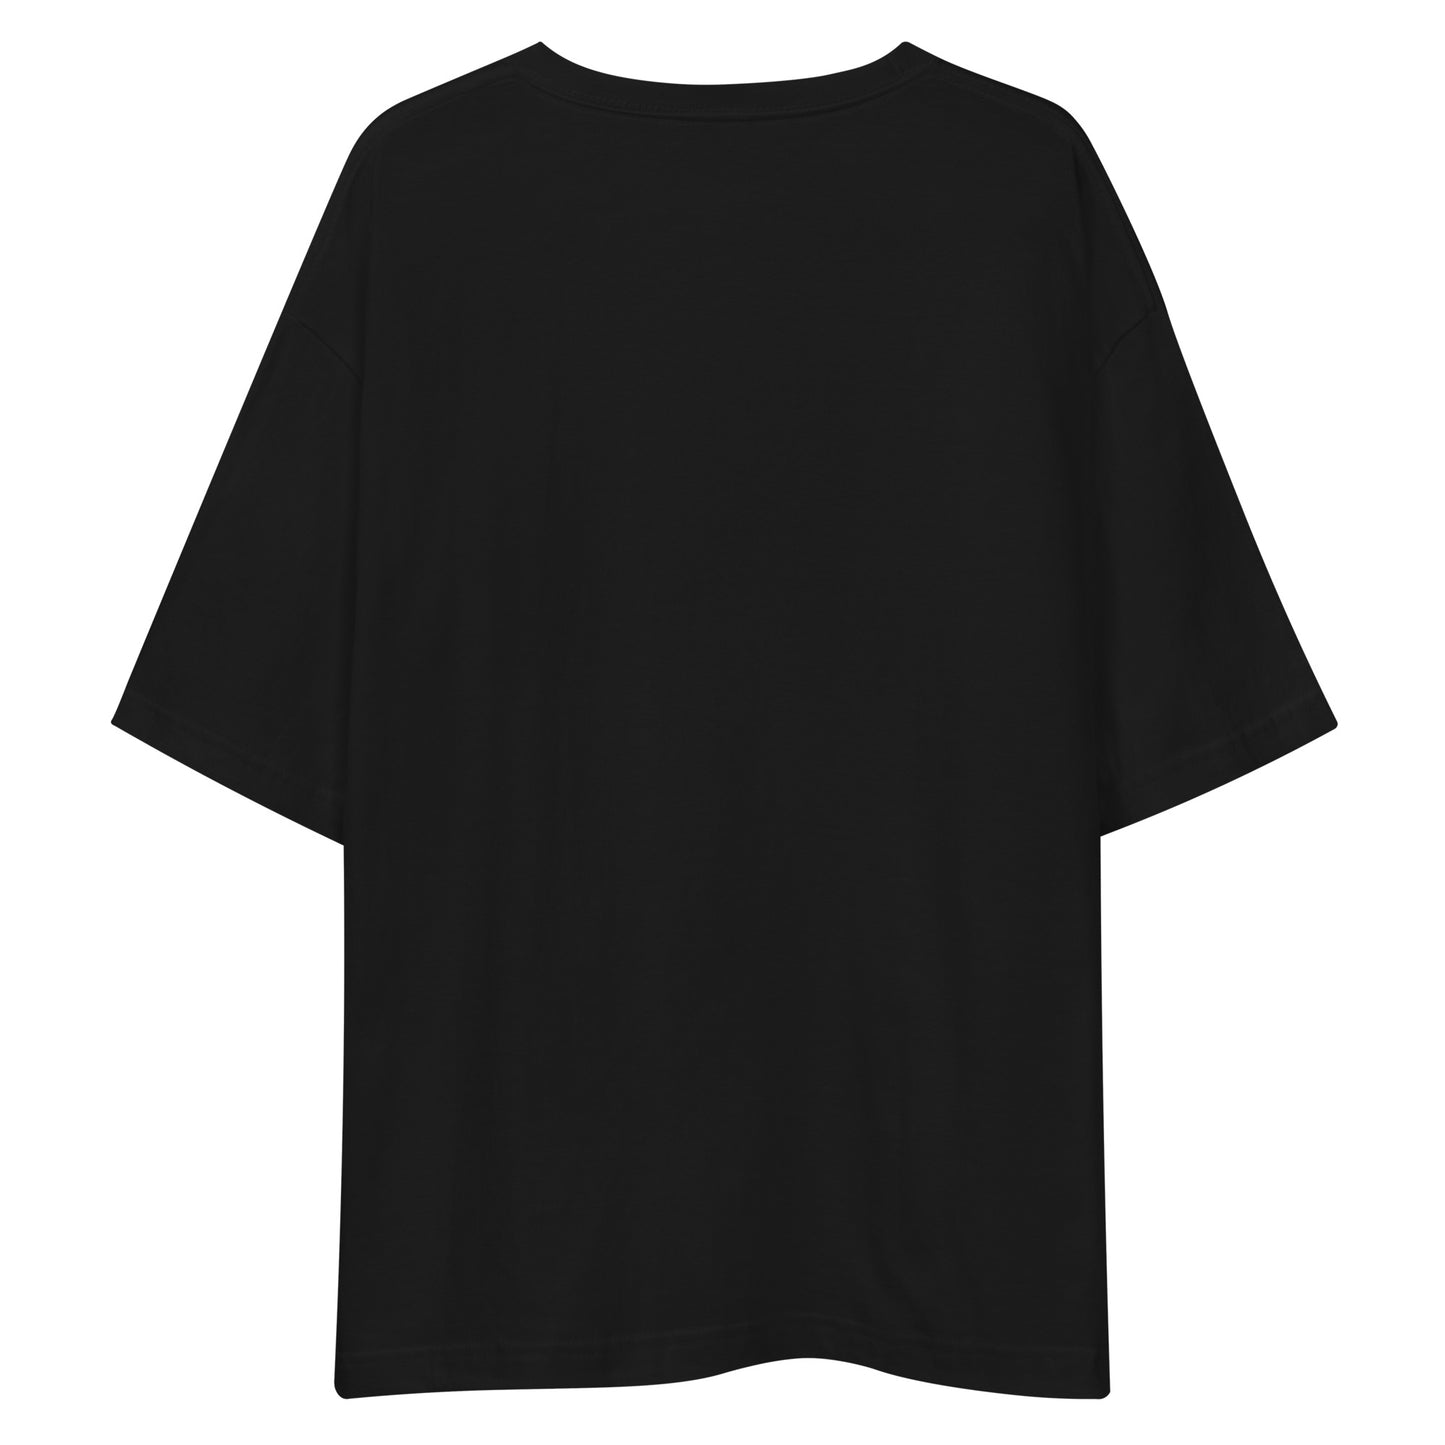 E225 - เสื้อยืด/ภาพเงาใหญ่ (กระโดดอวกาศ/ผู้หญิง : สีดำ/เงิน)